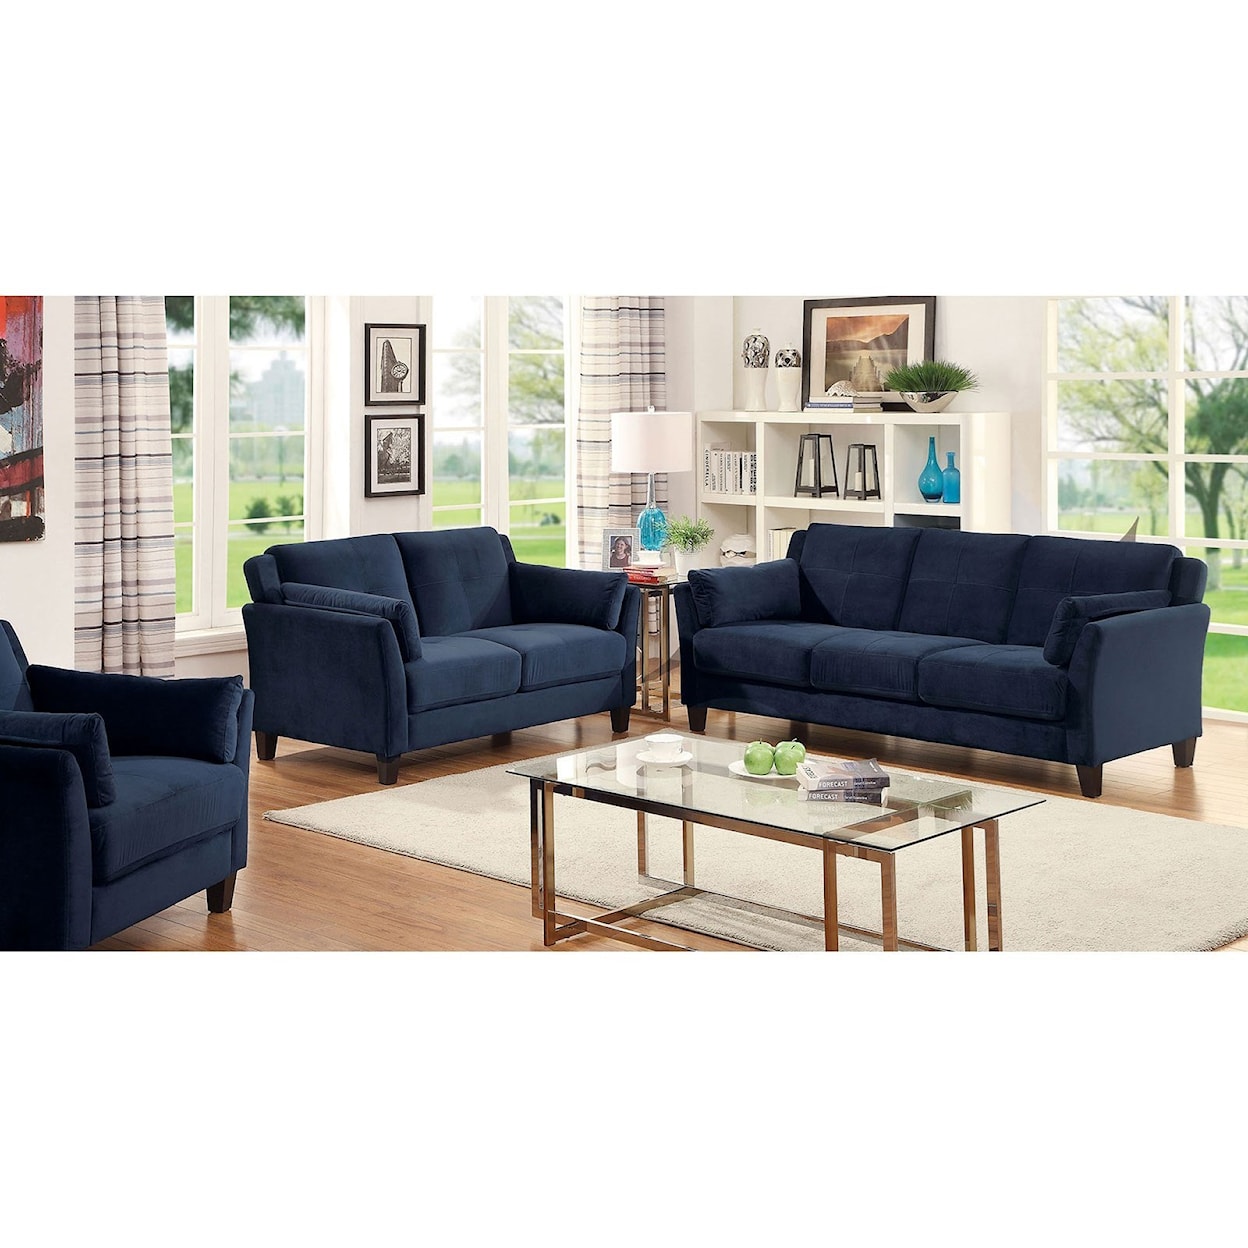 Furniture of America Ysabel Stationary Living Room Group